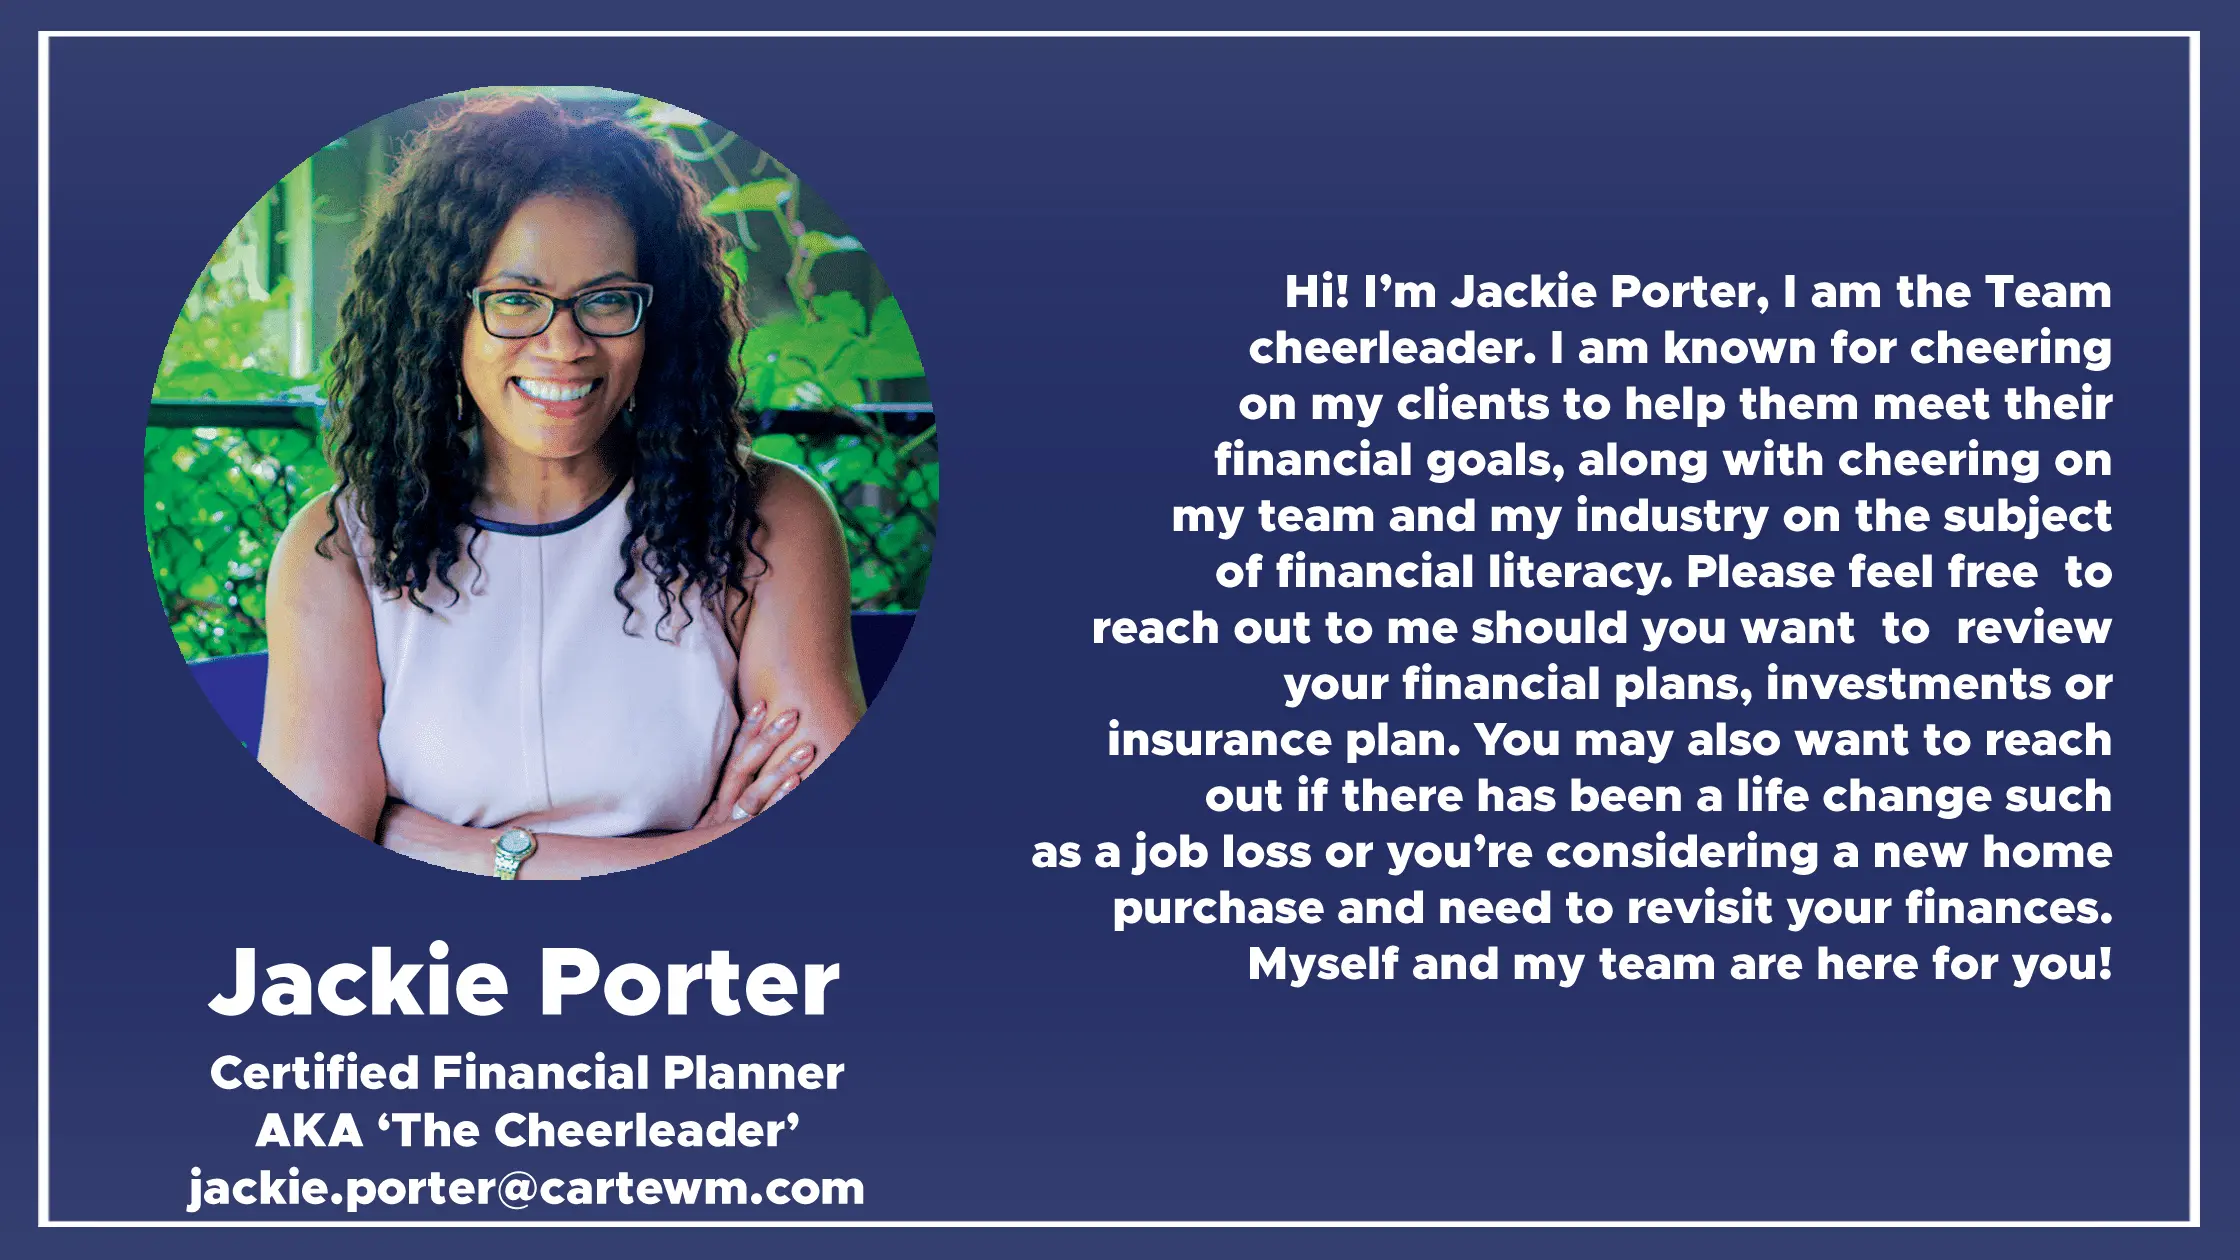 jackie porter cfp in toronto meet jackie jackie porter certified financial planner and financial advisor in toronto meet jackie